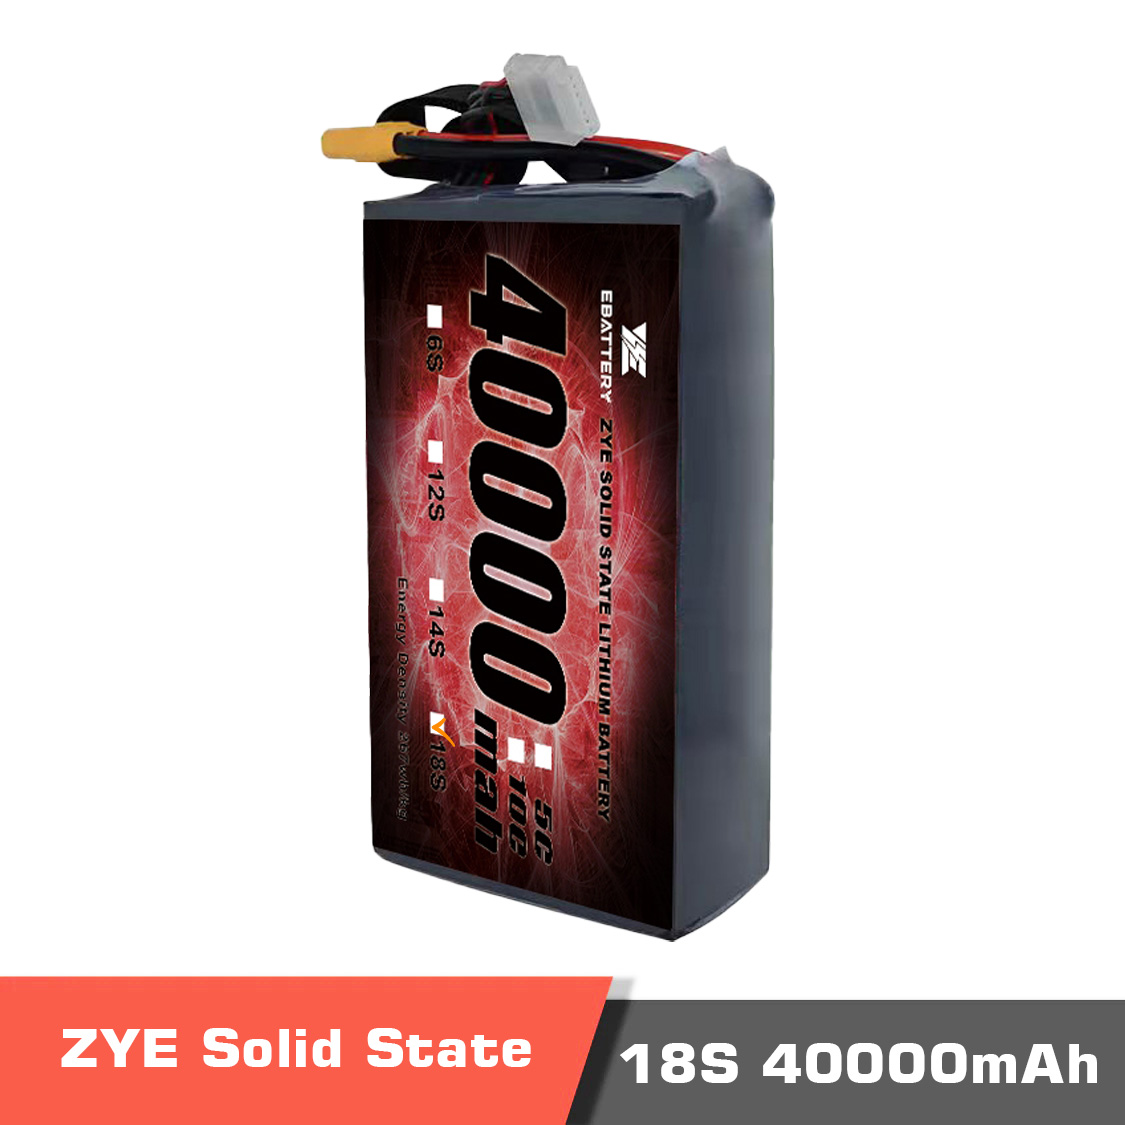 temp40000 18s1 - ZYE Power Ultra HV Semi Solid-State Battery,Ultra HV Semi Solid-State Battery,18S 54000mAh high voltage LiPo Battery,18S 54000mAh HV LiPo Battery,Solid-state LiPo battery,lipo battery,drone battery,14s battery,high energy density battery,UAV,drone,vtol,ZYE Power,ZYE power Battery - MotioNew - 1